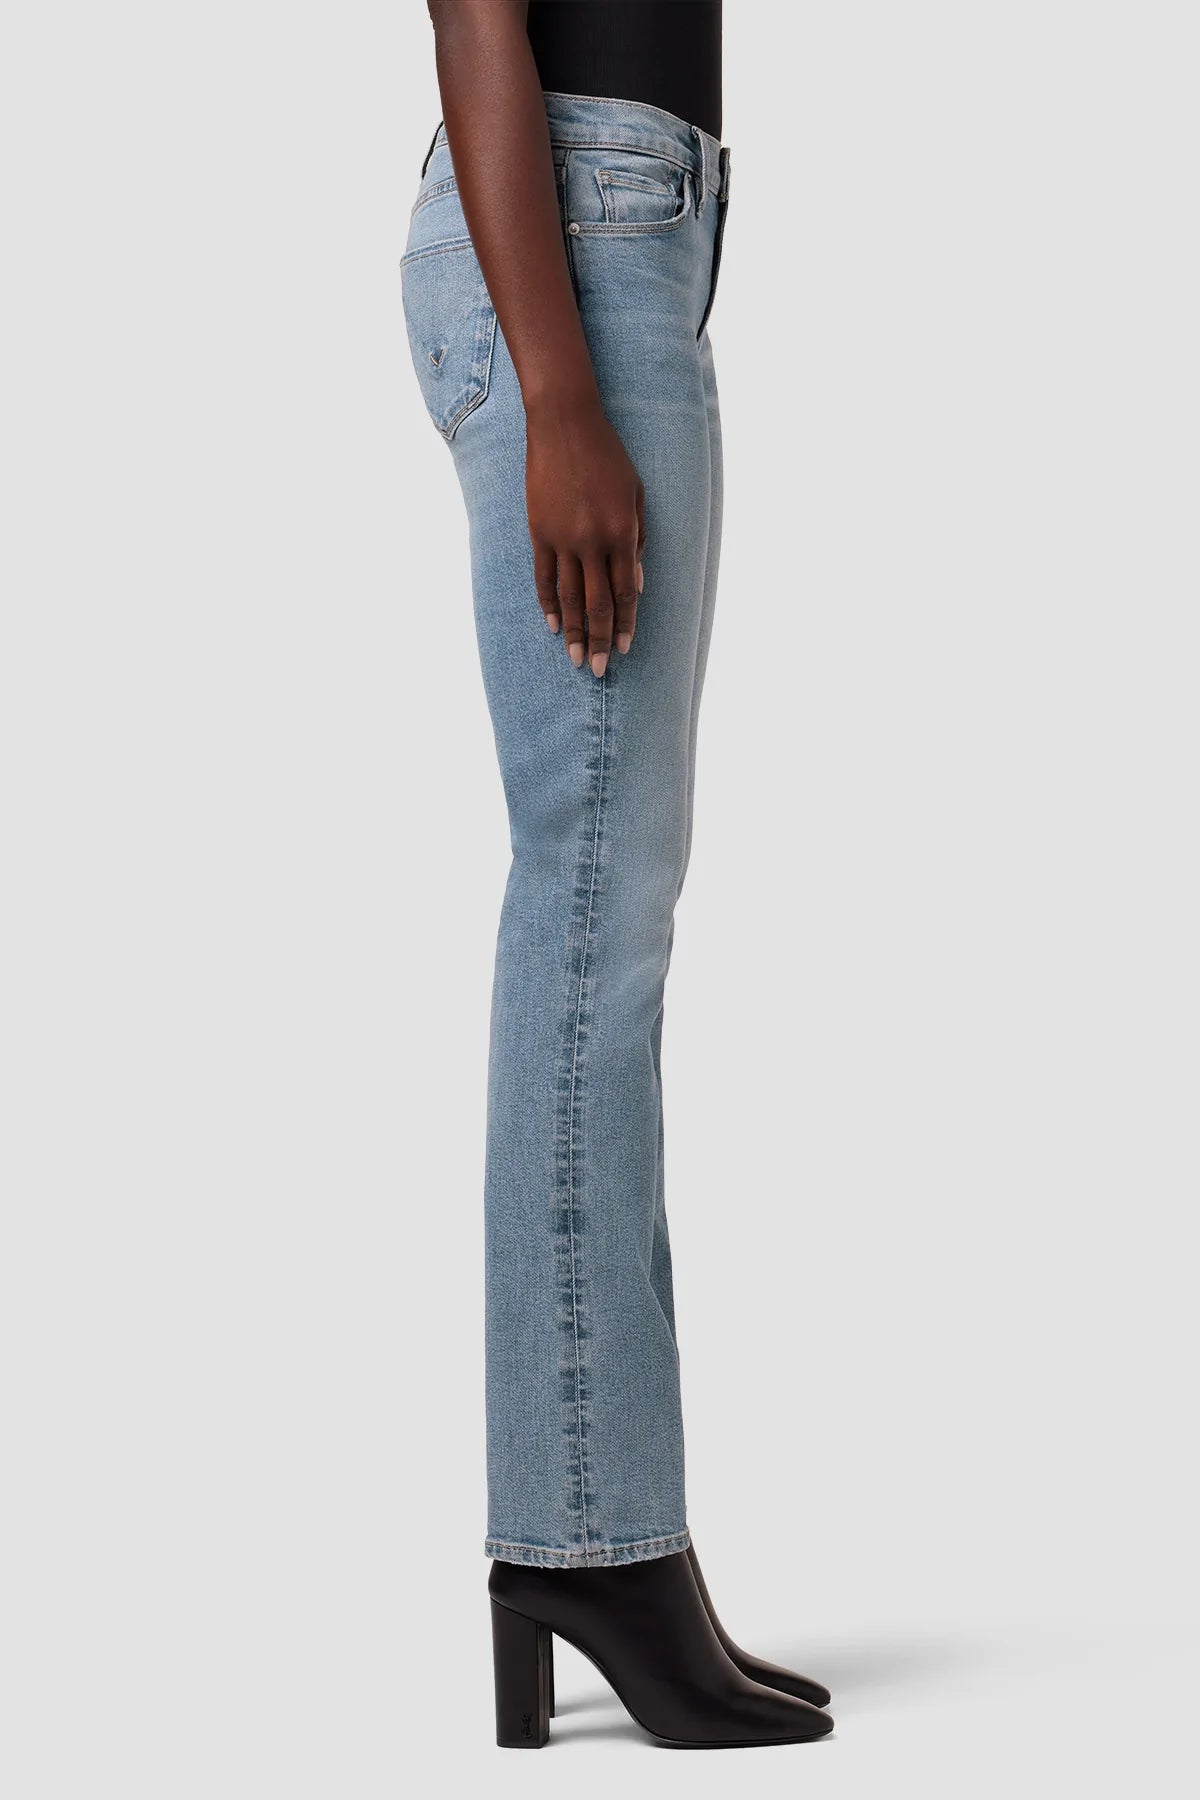 Hudson Jeans Nico Mid-Rise Straight Crop Jean - Seaglass